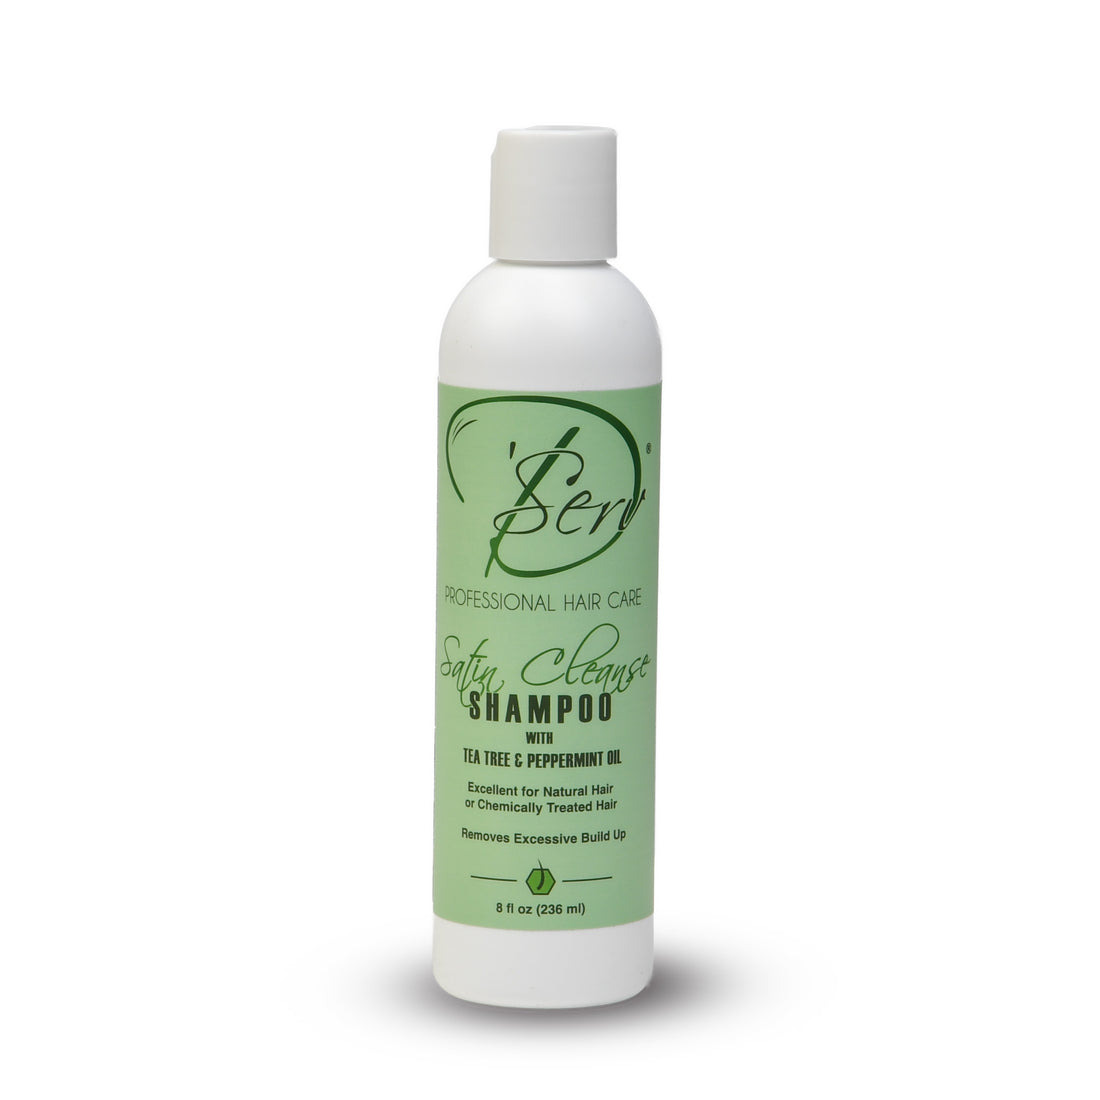 Satin Cleanse Shampoo (NEW)